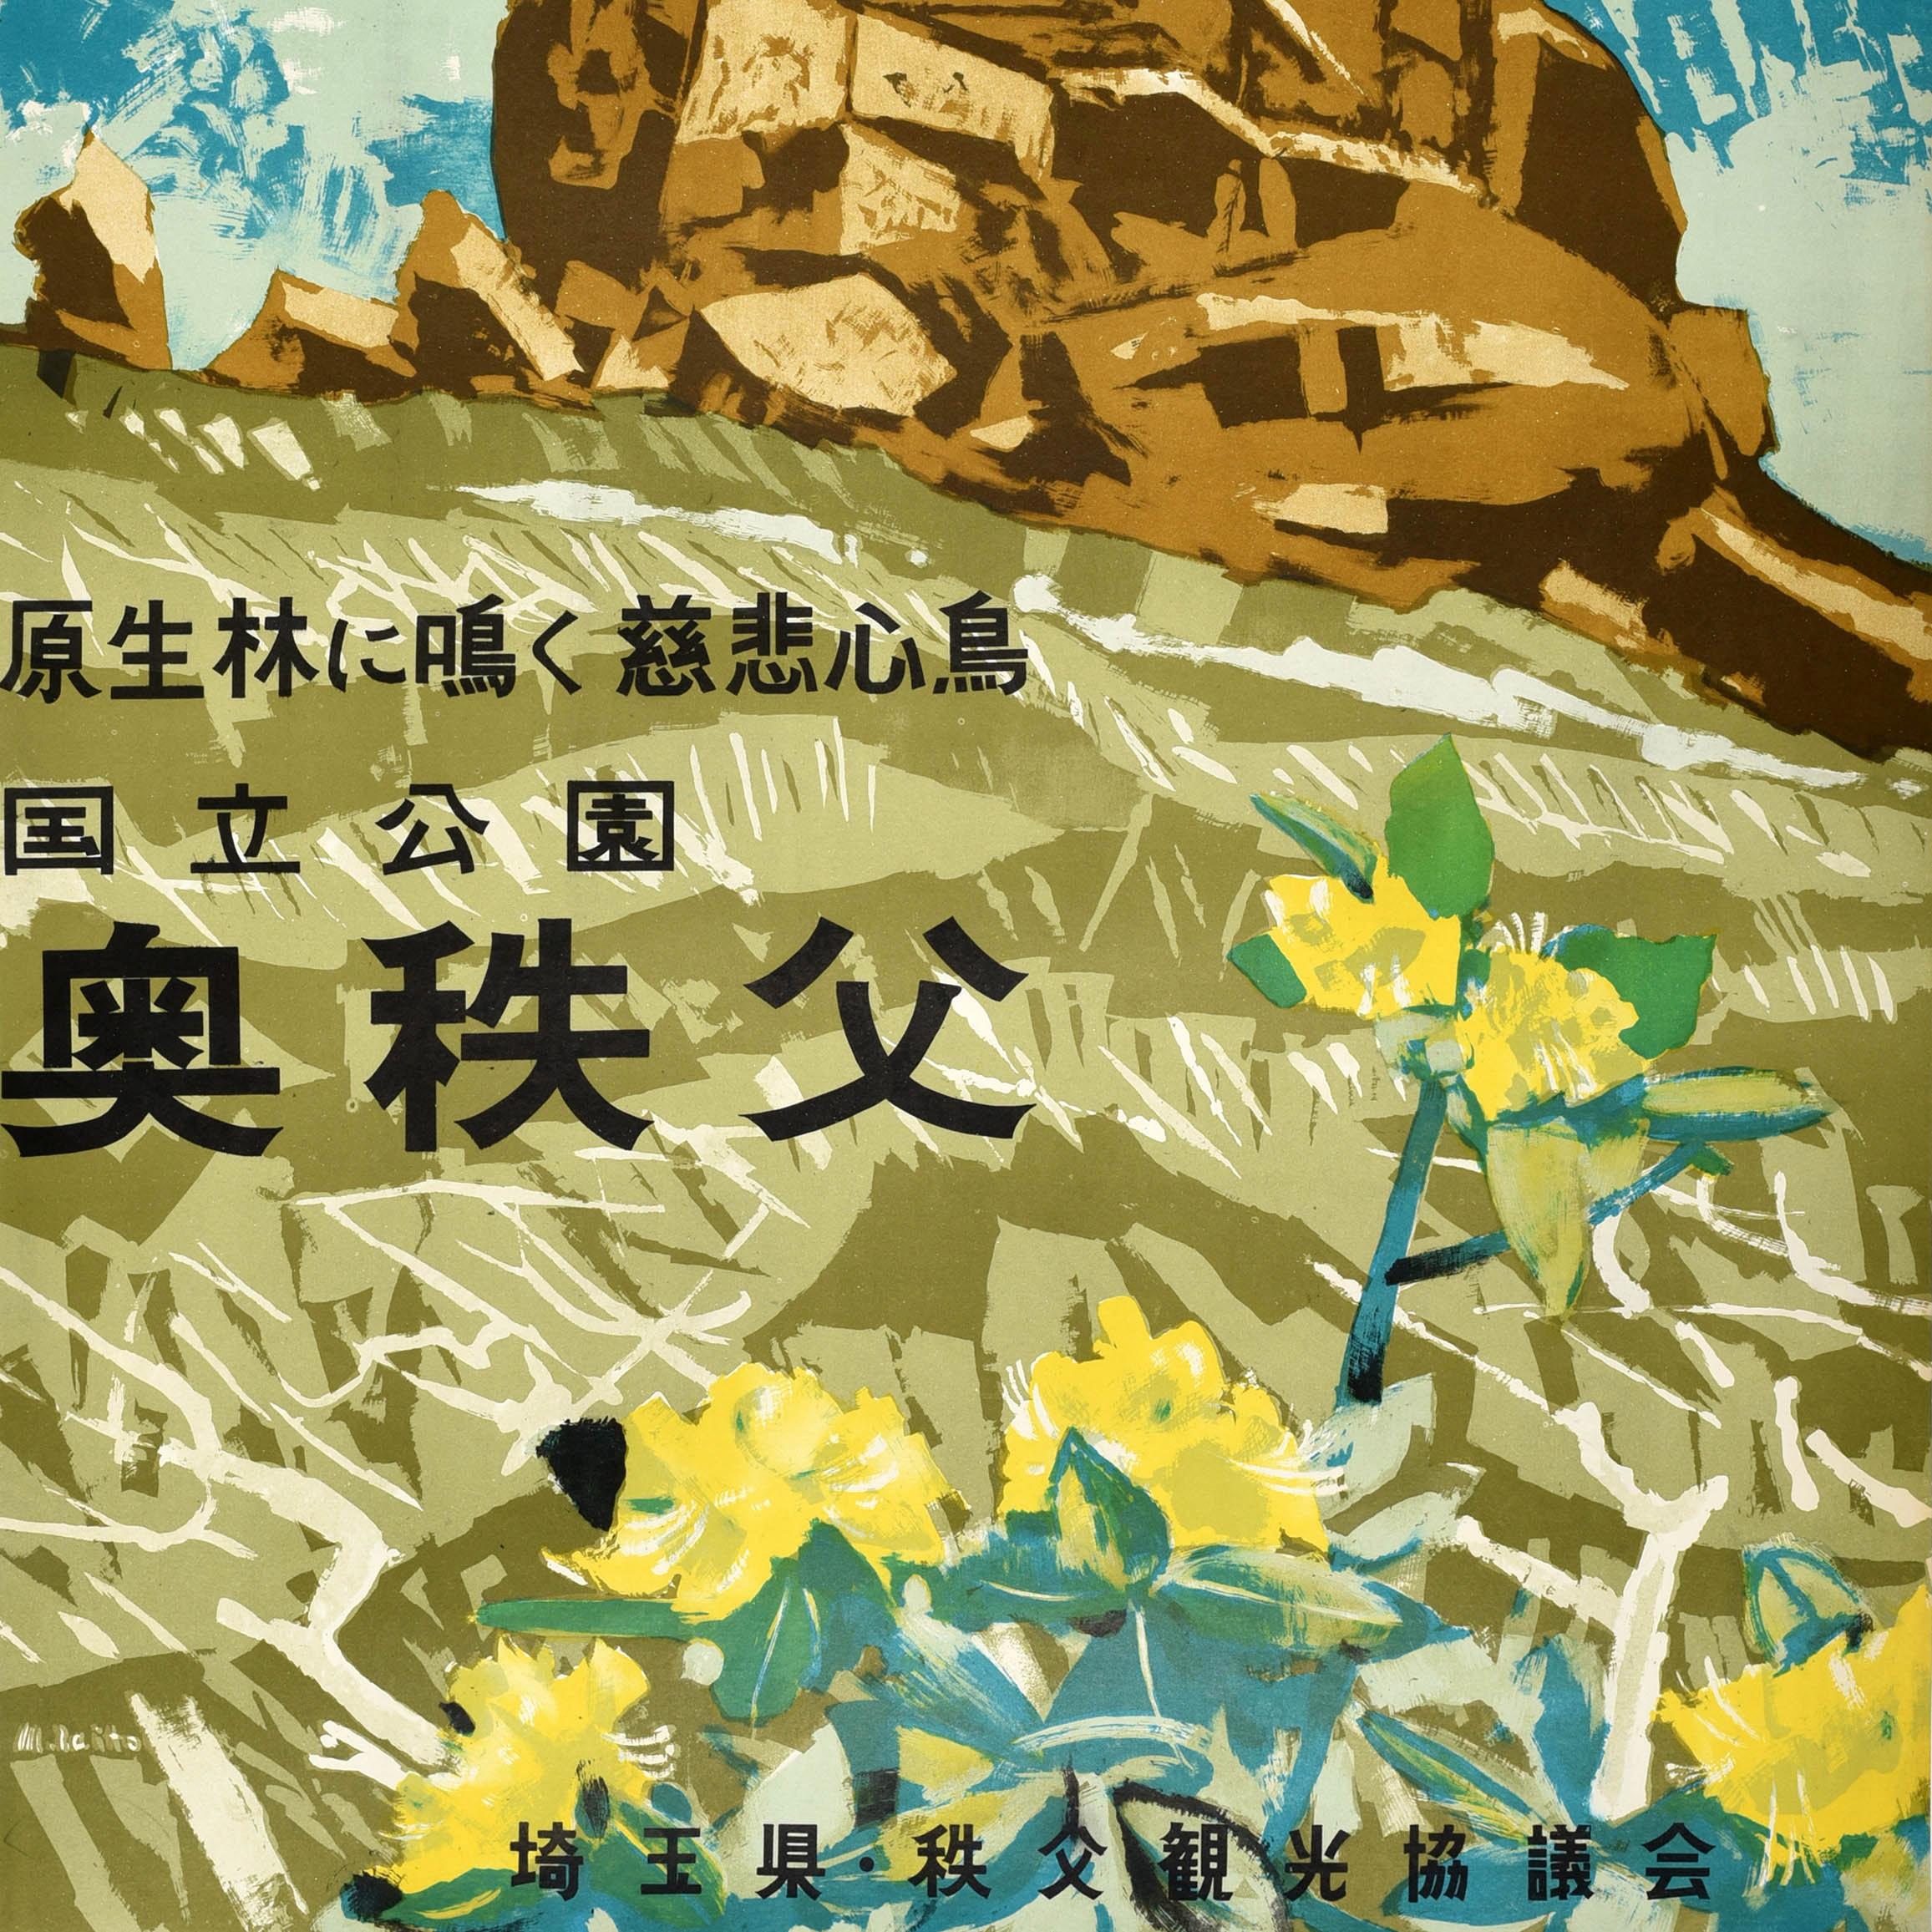 Japanese Original Vintage Asia Travel Poster Japan Okuchichibu Tama Kai National Park For Sale